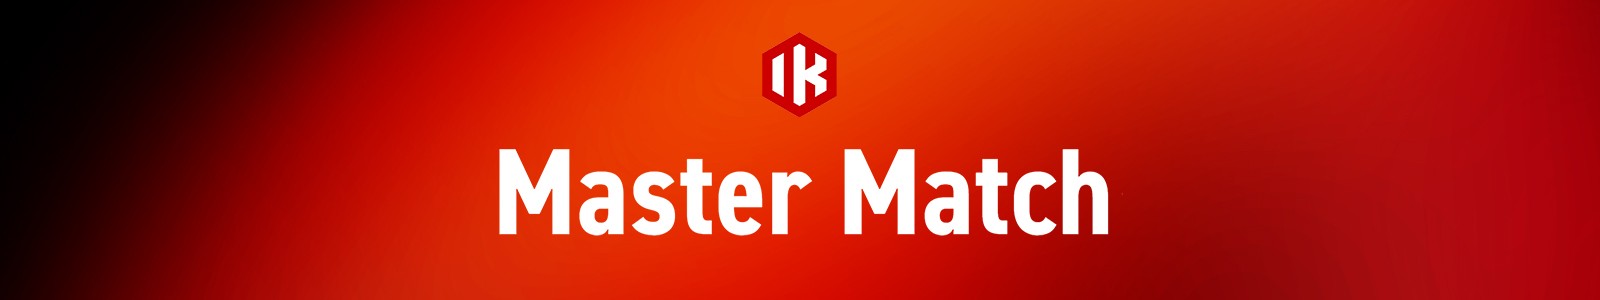 Master Match by IK Multimedia